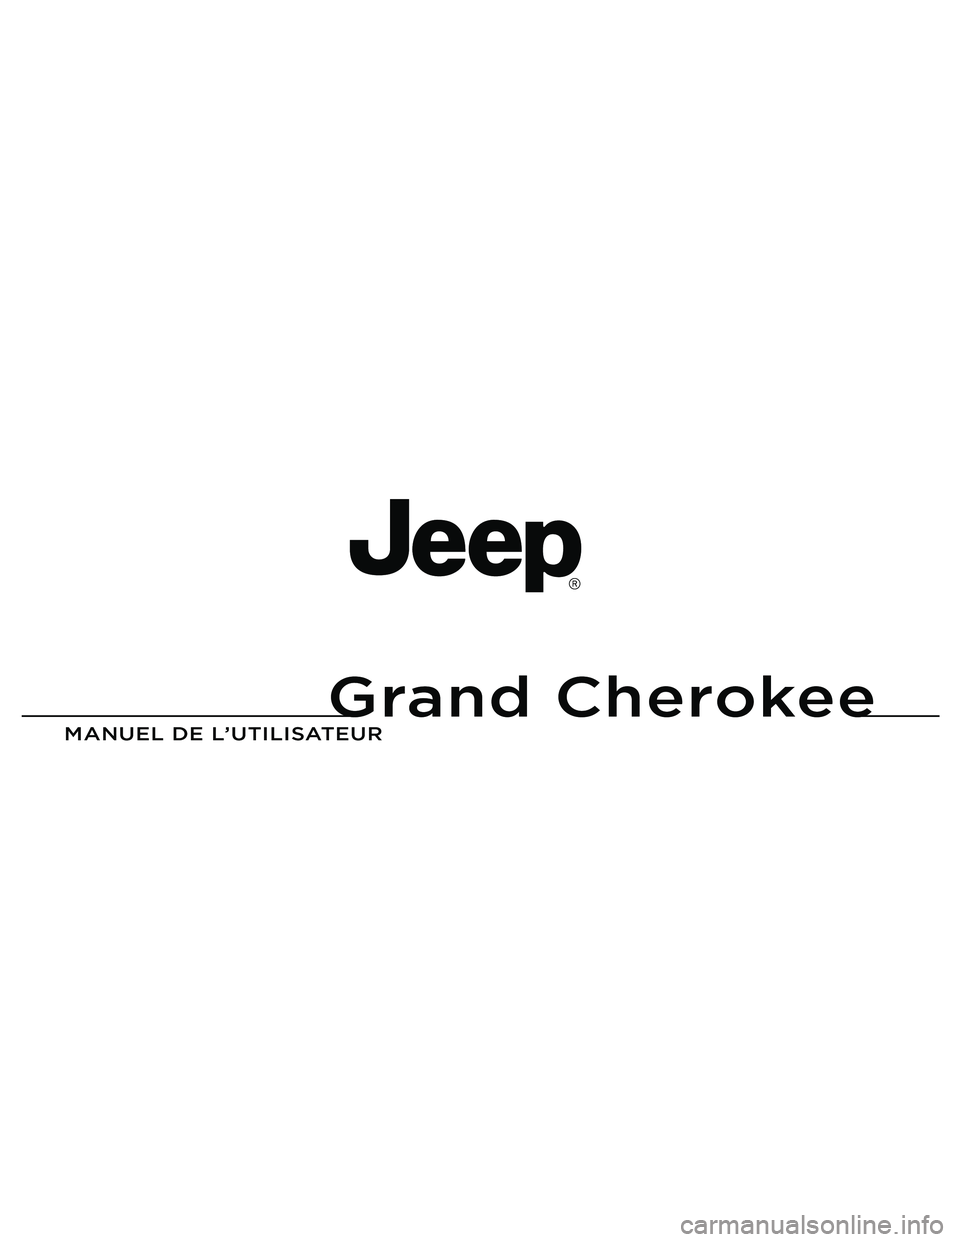 JEEP GRAND CHEROKEE 2011  Notice dentretien (in French) Grand Cherokee
MANUEL DE L’U\fILISA\fEUR 